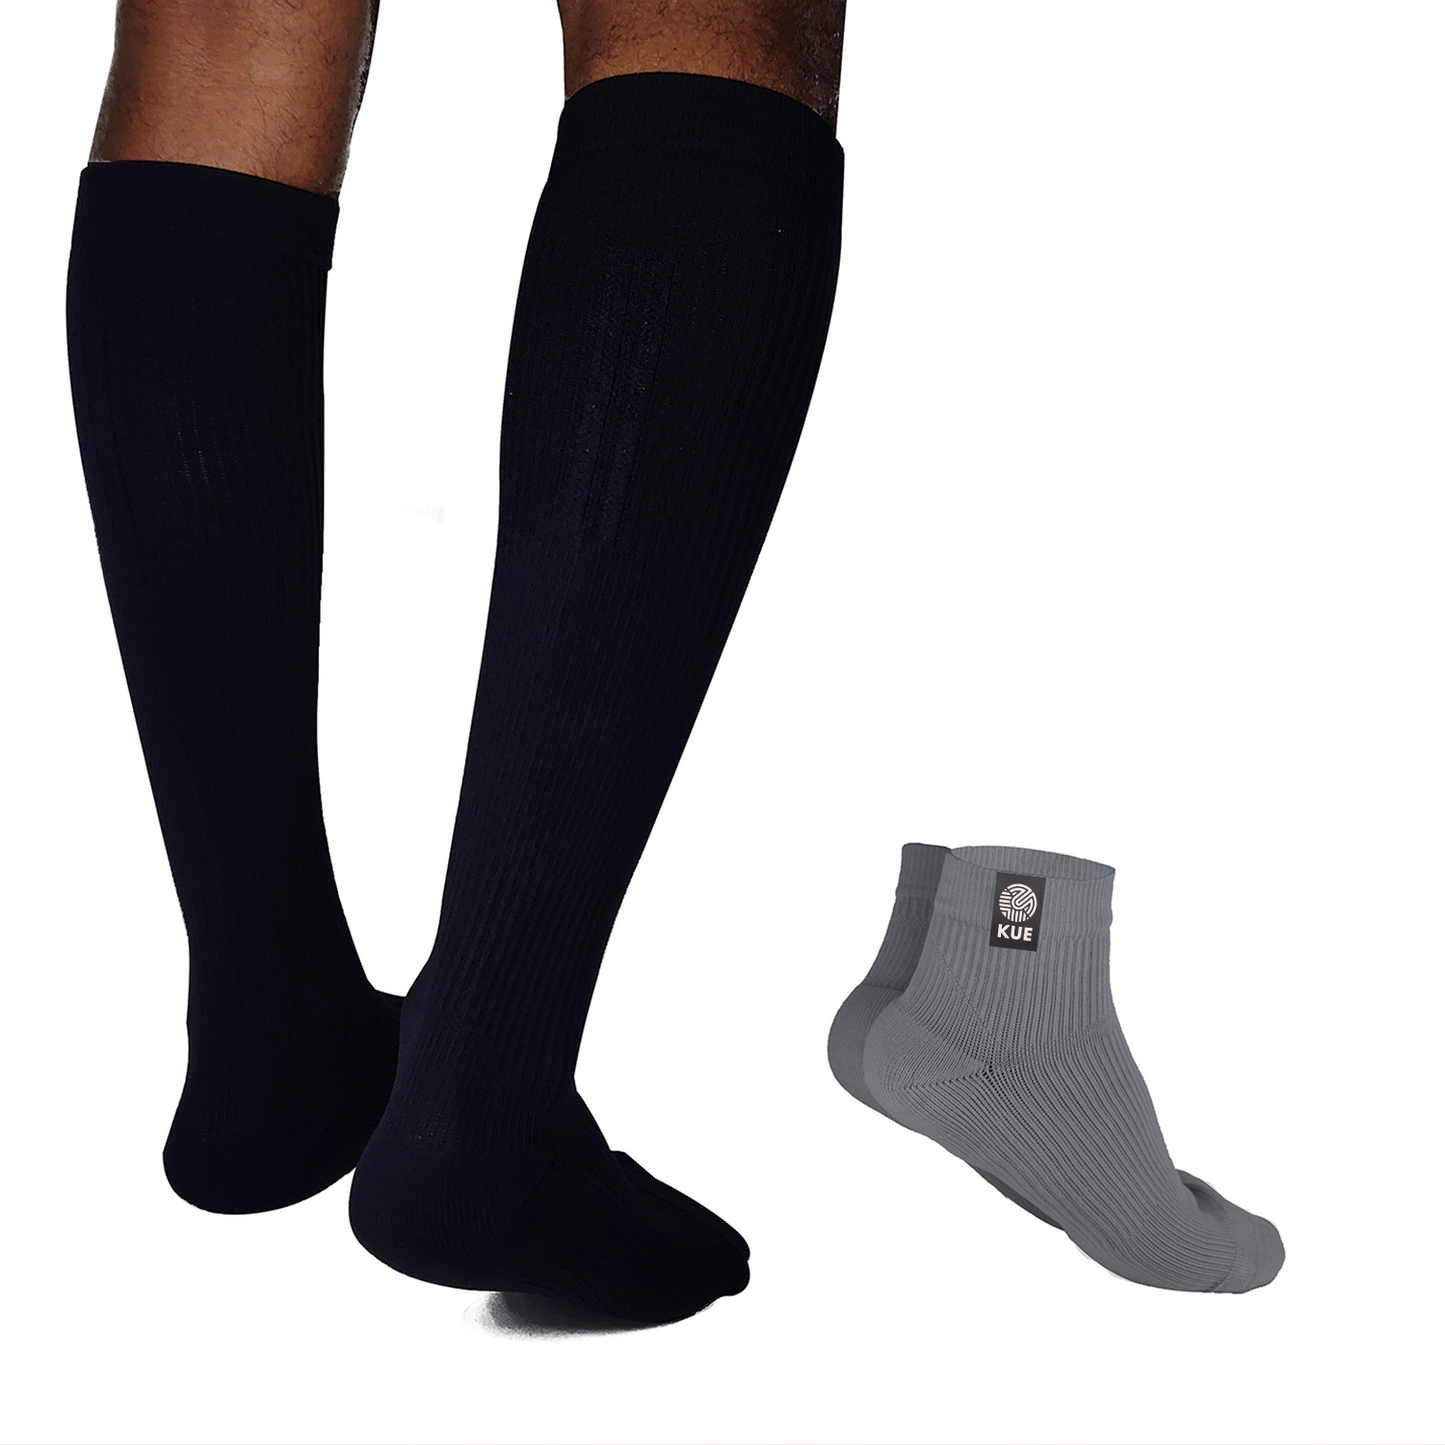 Black Graduated Compression Knee (18-21mmHg) - Grey Ankle Length Socks (Pair of 2)